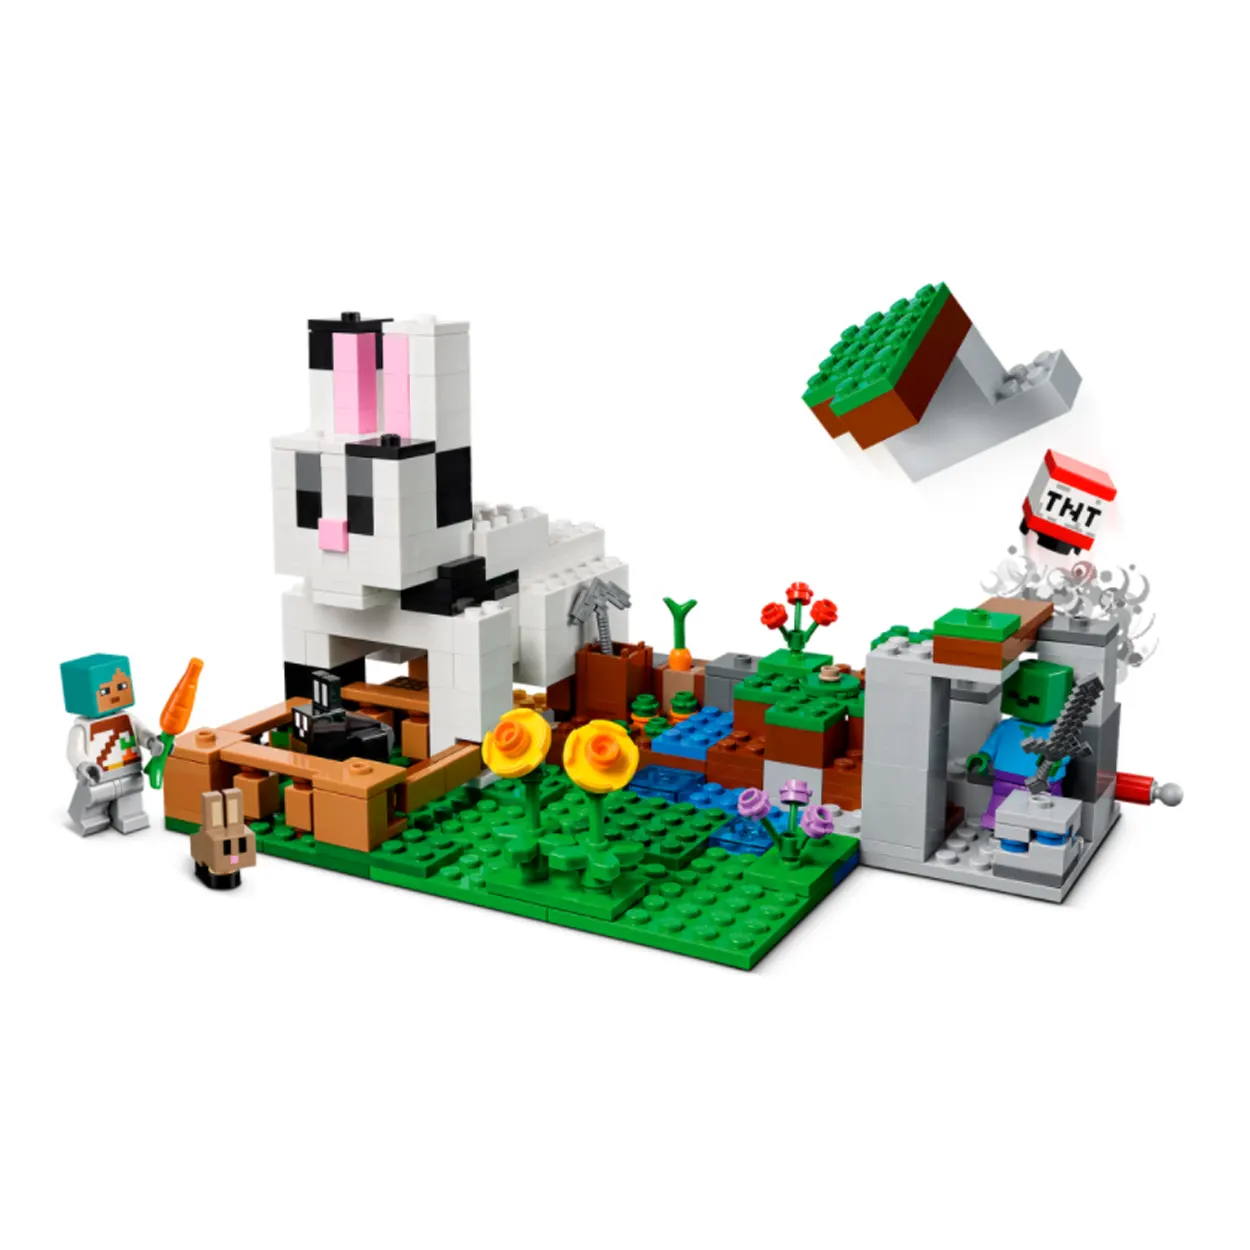 LEGO Minecraft New Sets for Jan. 1st 2022 Revealed | Animals and Mushroom